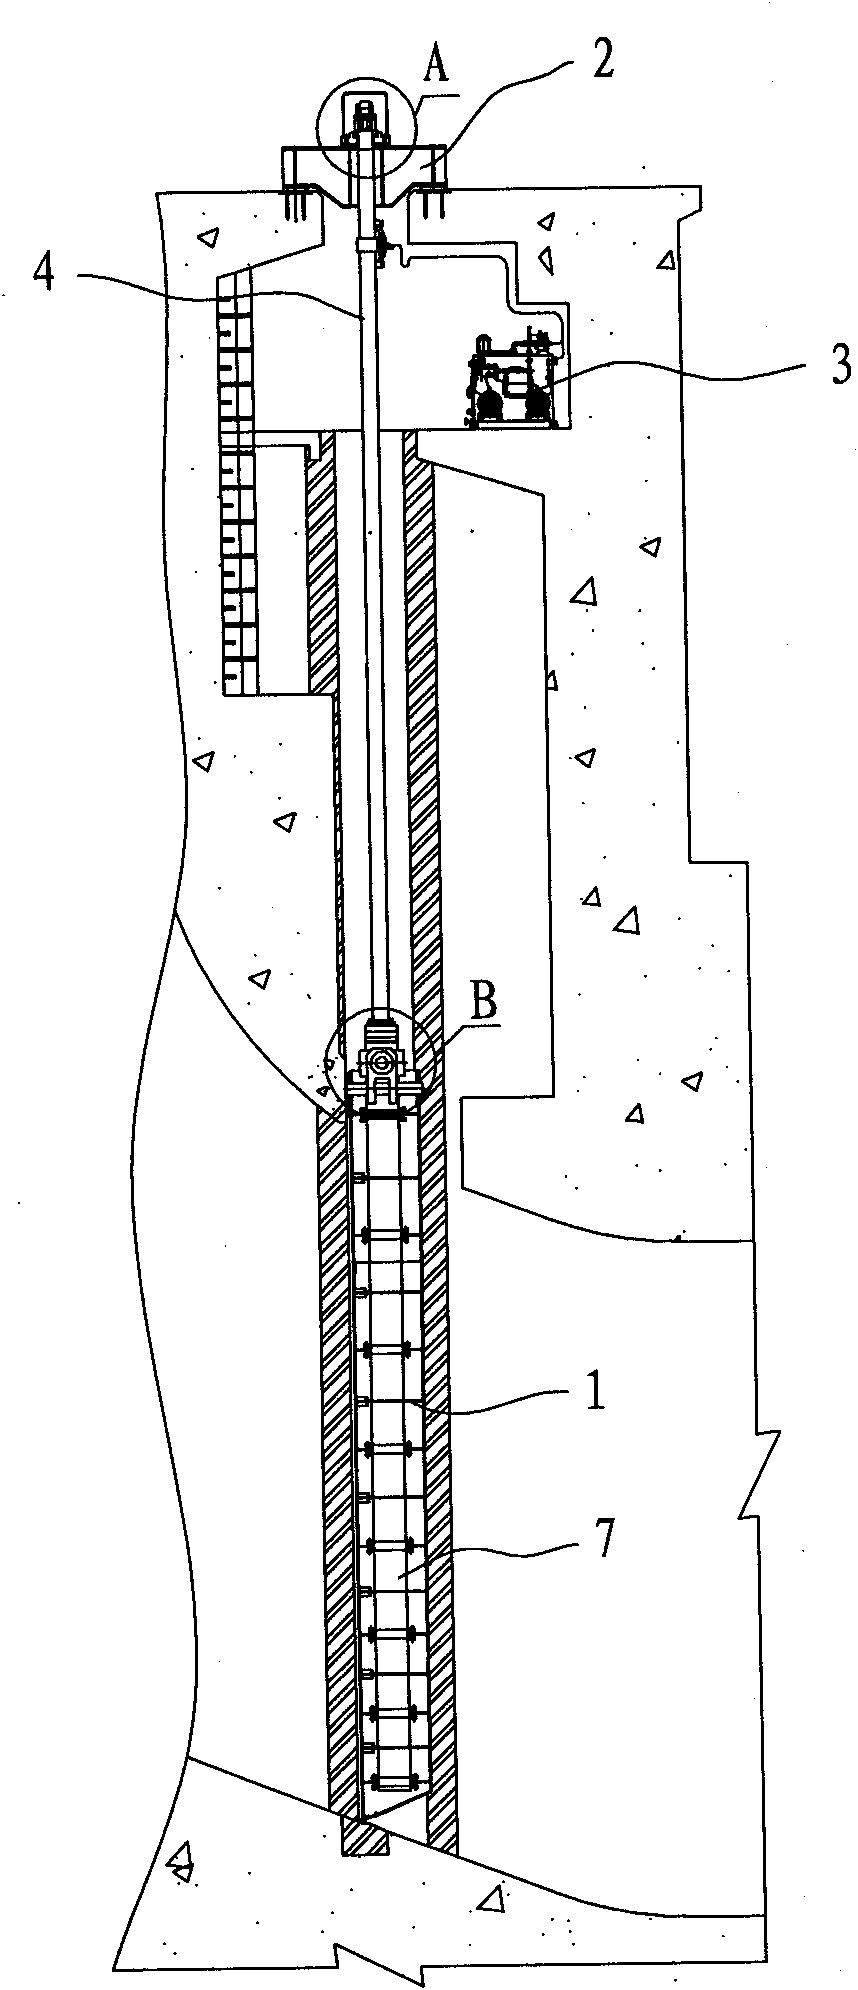 Power station emergency gate using inverted hydraulic hoist